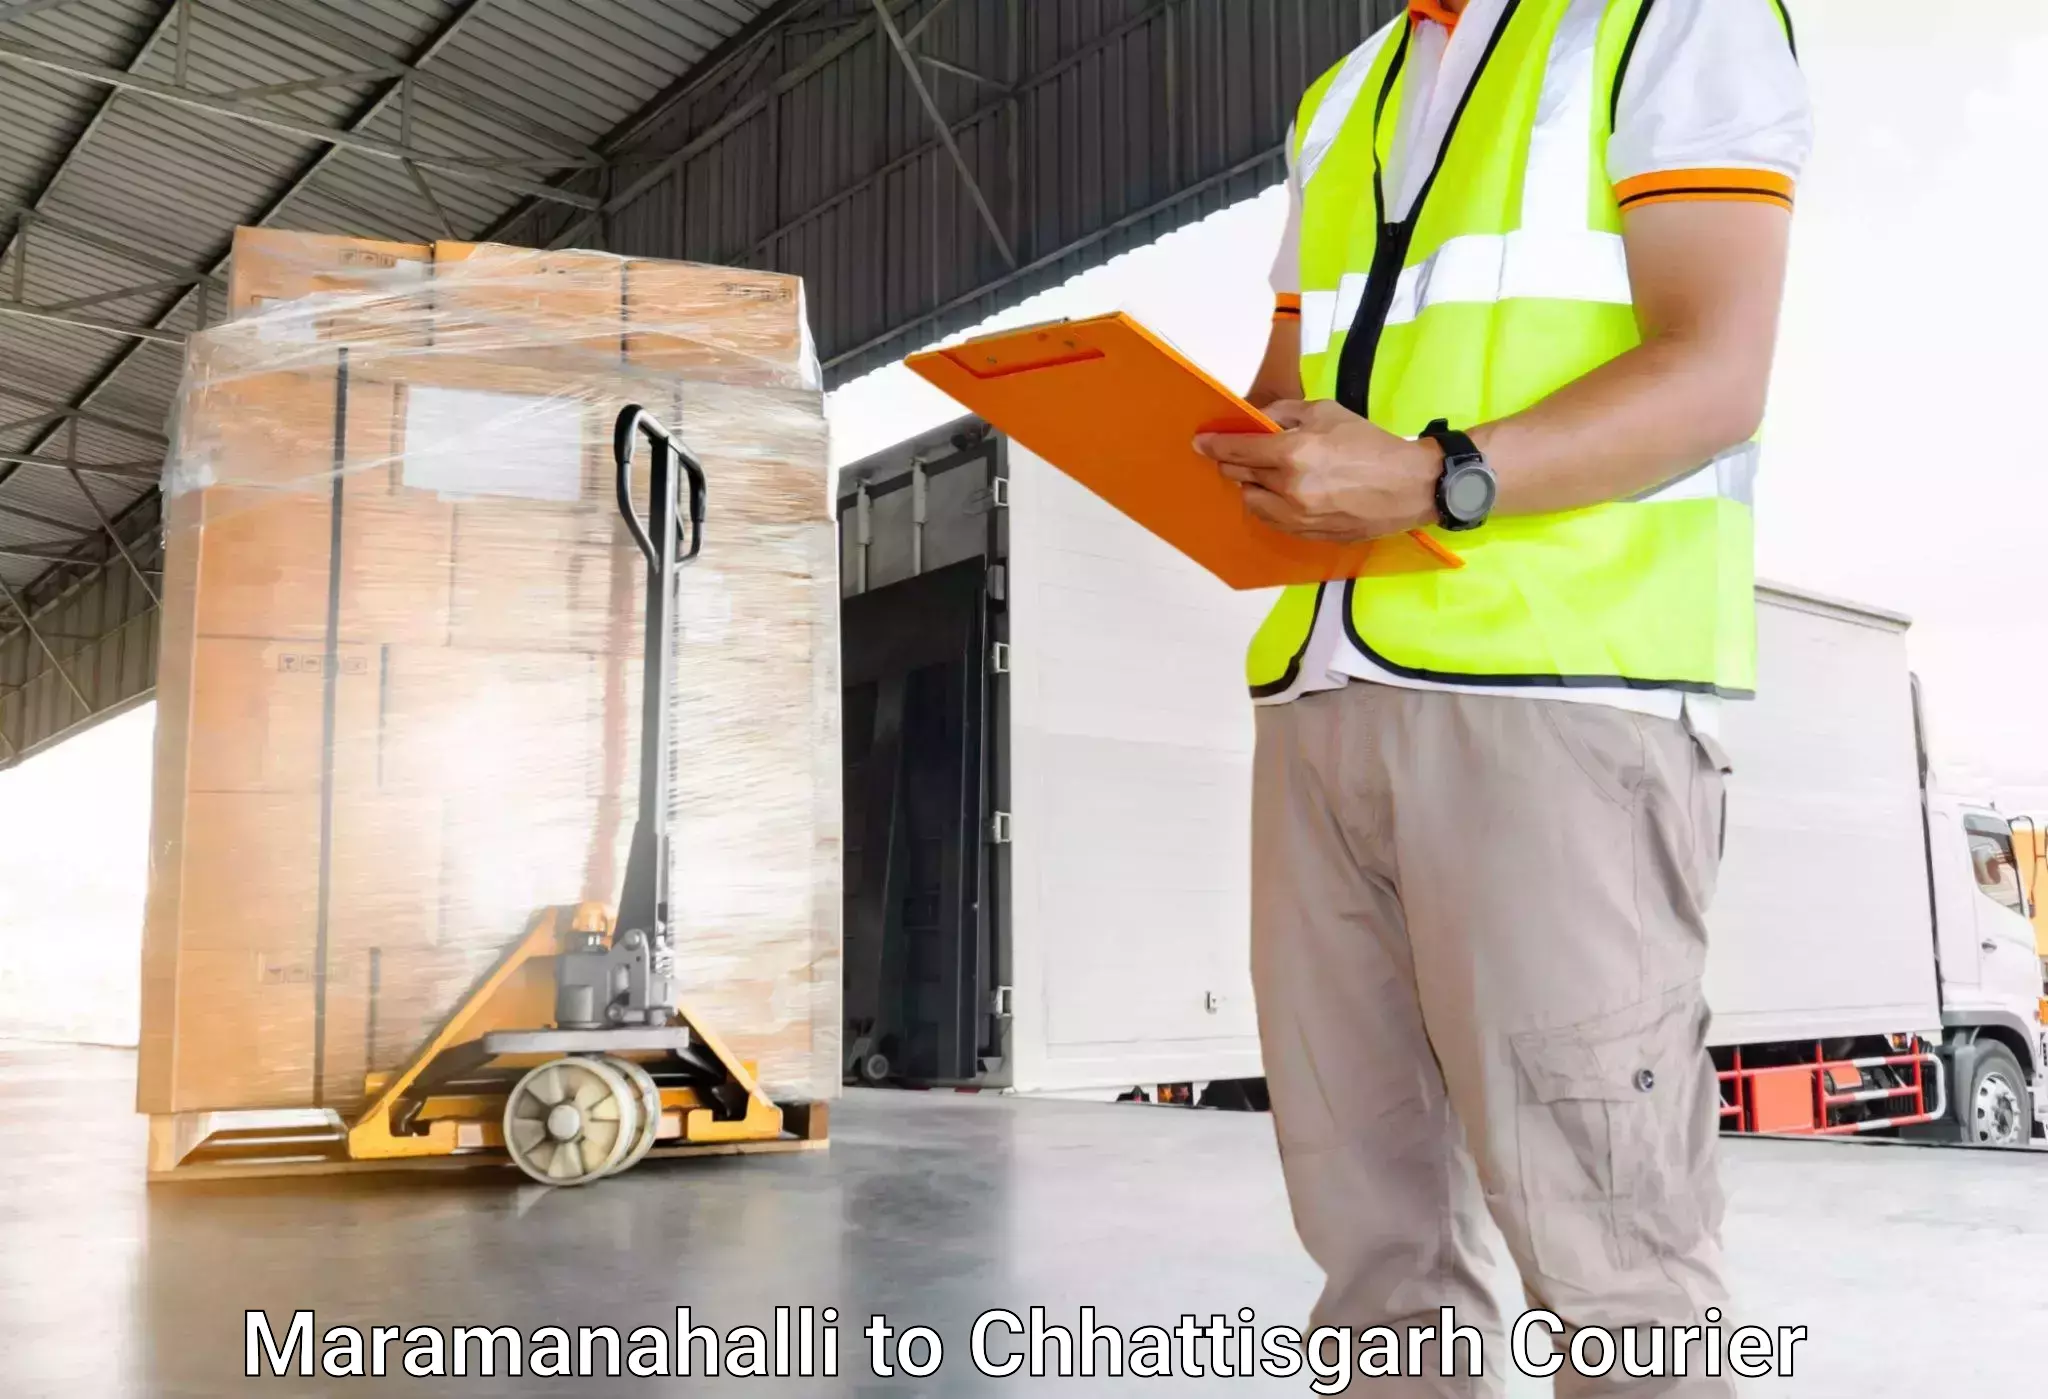 Luggage shipment specialists Maramanahalli to Berla